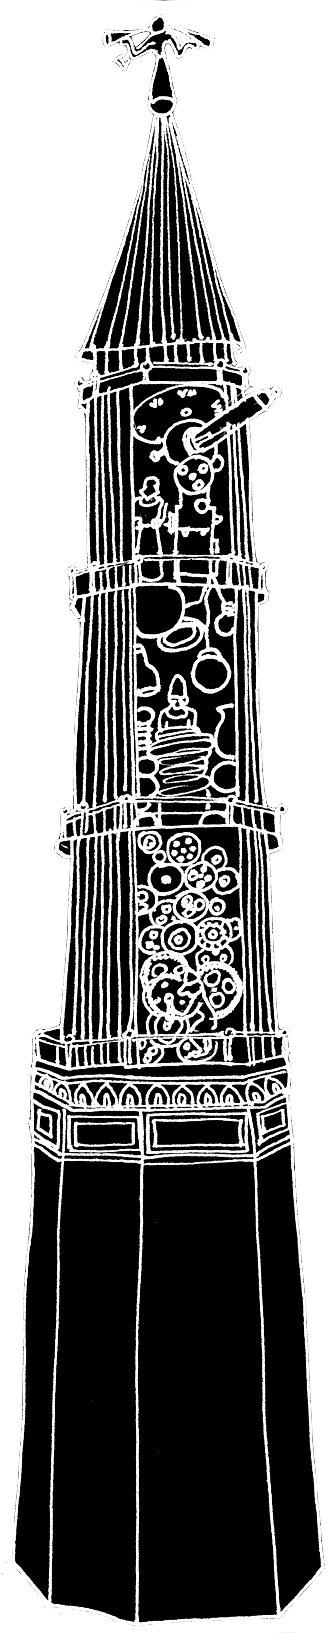 Tower of Medieval Science Sharmanka Kinemat